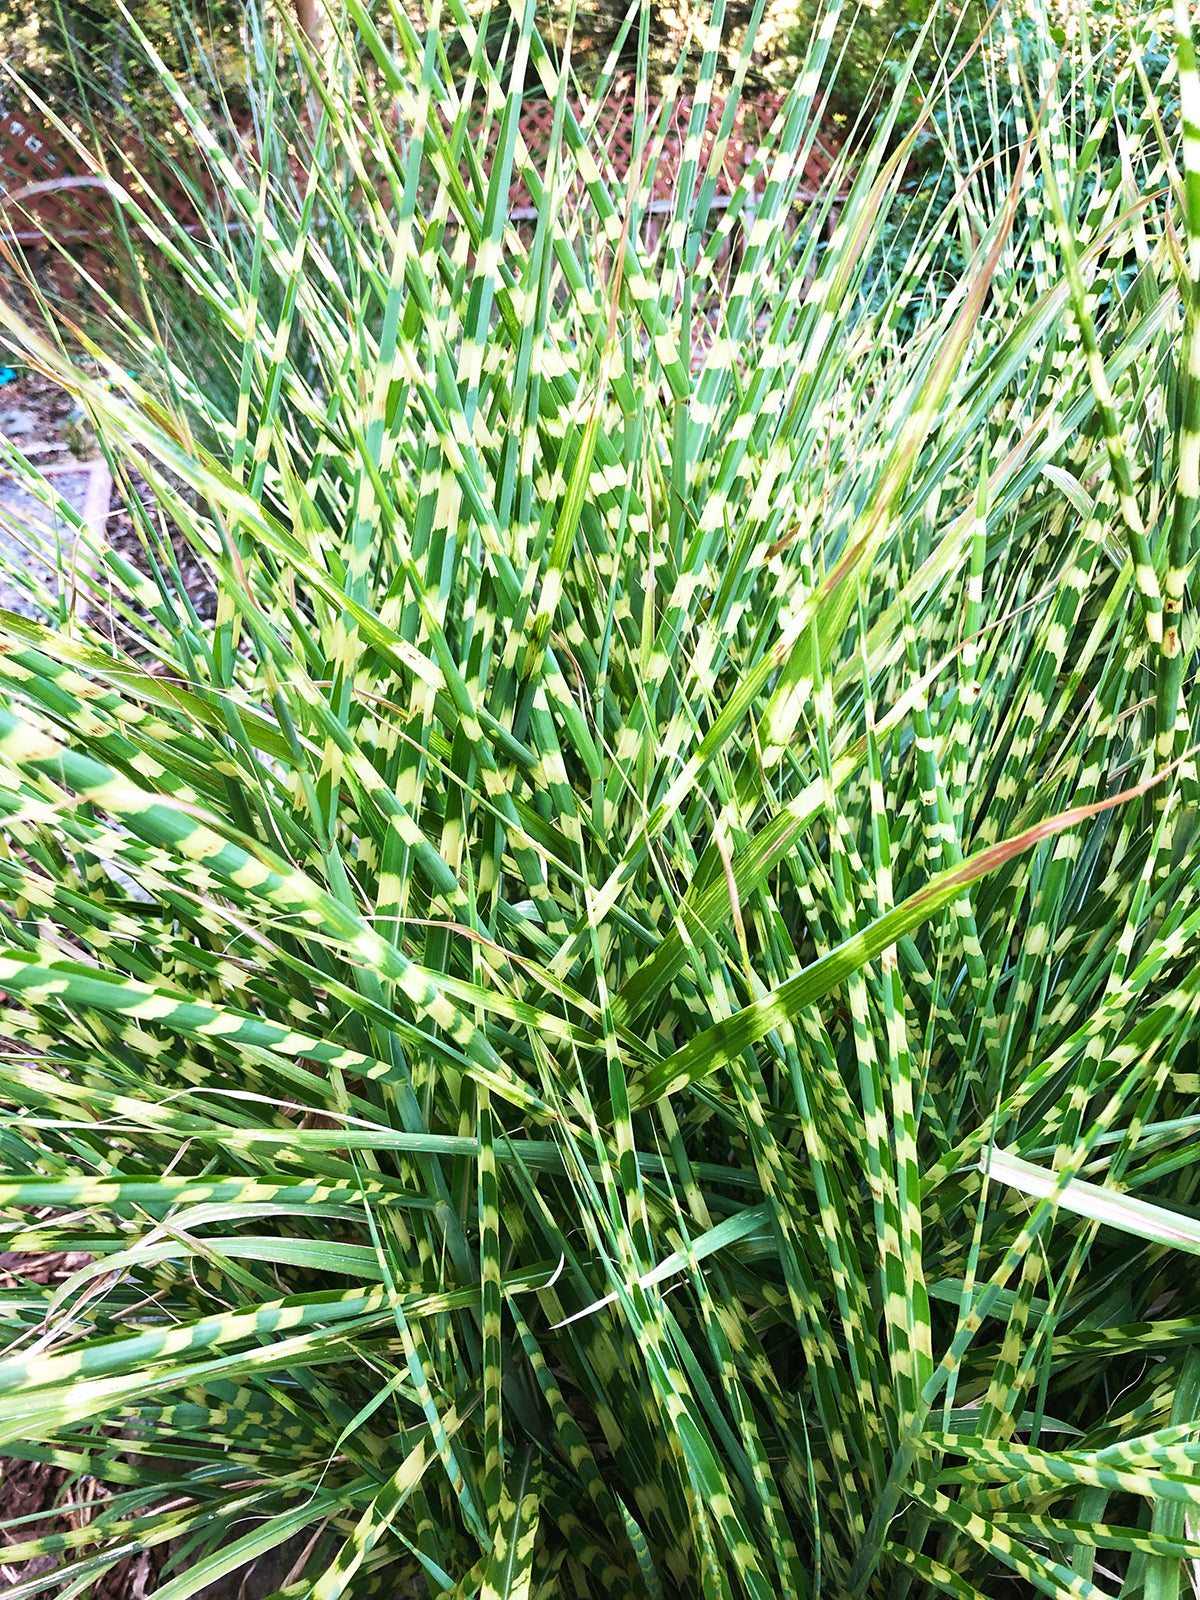 Grass Zebra - 3 bareroot plants